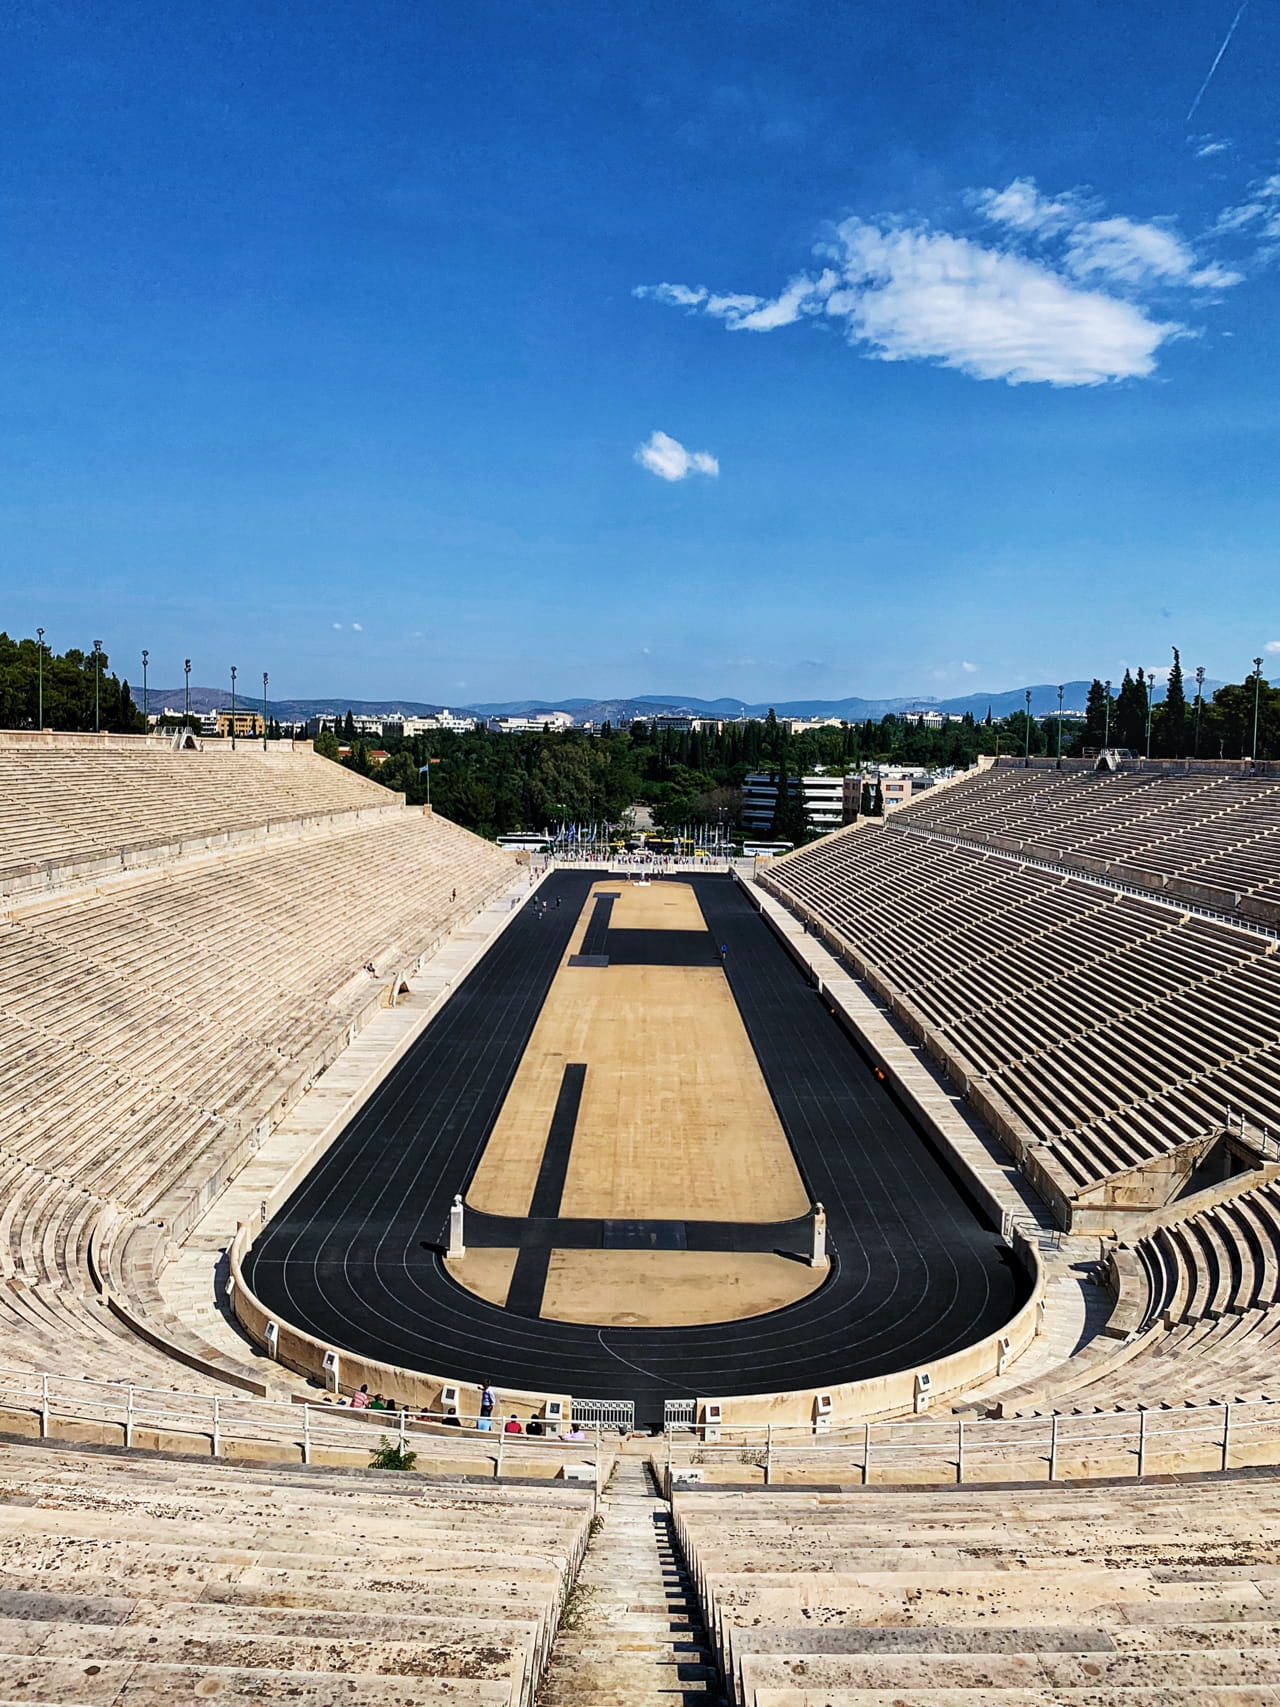 The Panathenaic Stadium is open all year round